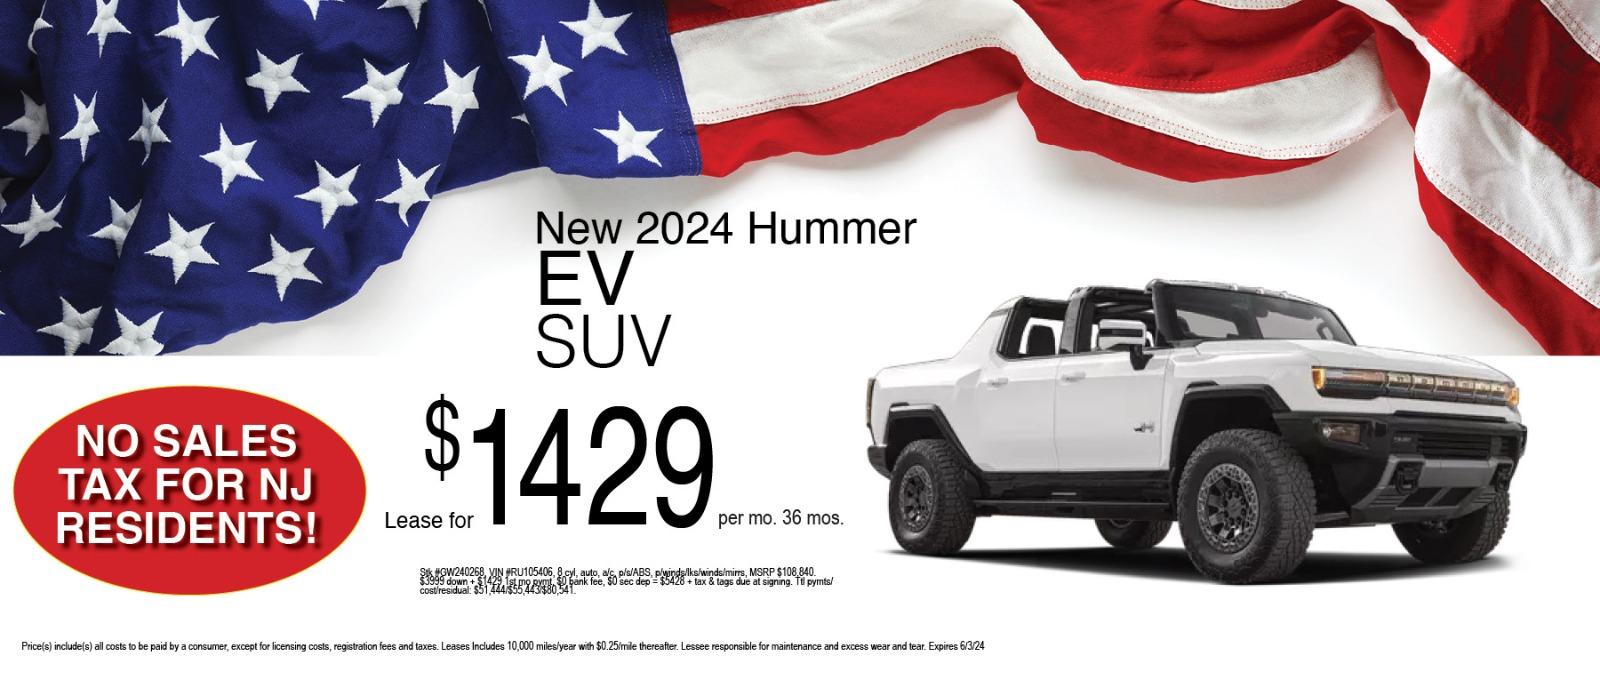 New 2024 Hummer EV SUV